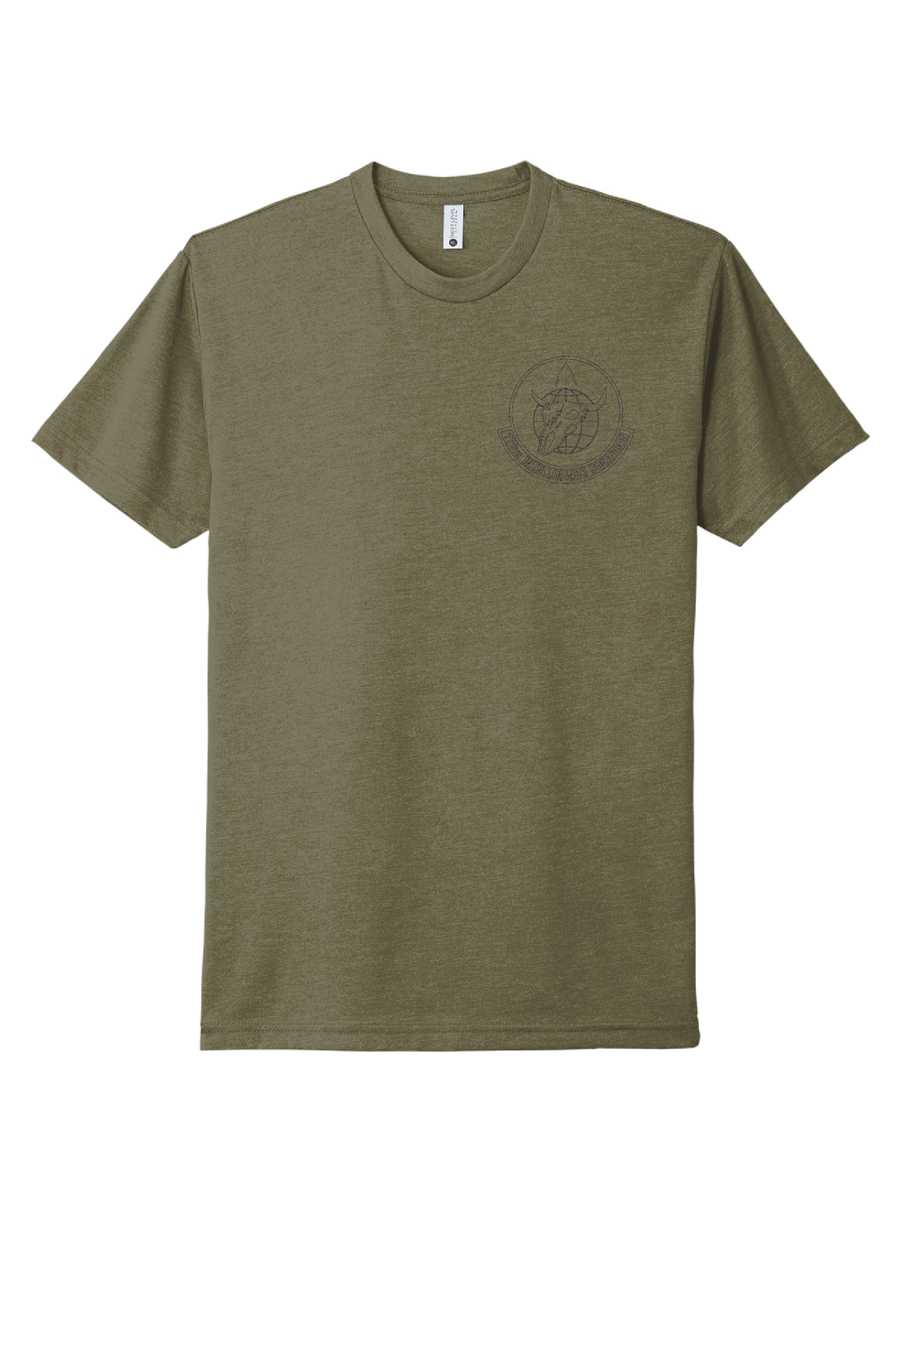 Happy Hooligans 176th Intelligence Squadron Black Badge T-shirt (Preorder)